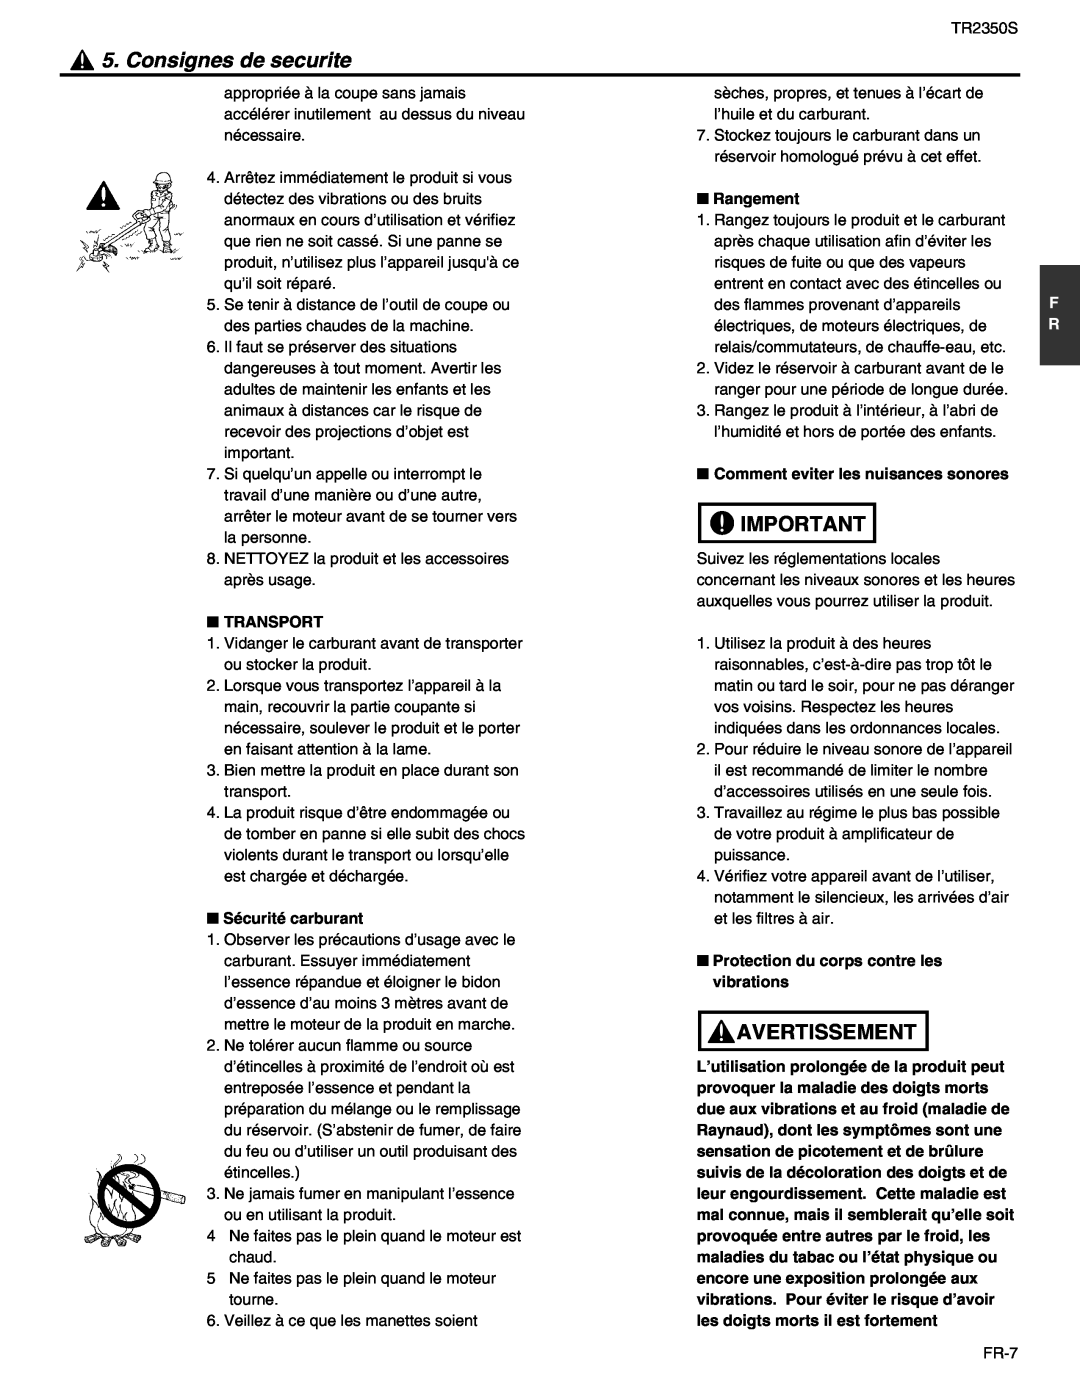 RedMax TR2350S manual Consignes de securite, Avertissement, Transport, Sécurité carburant, Rangement 